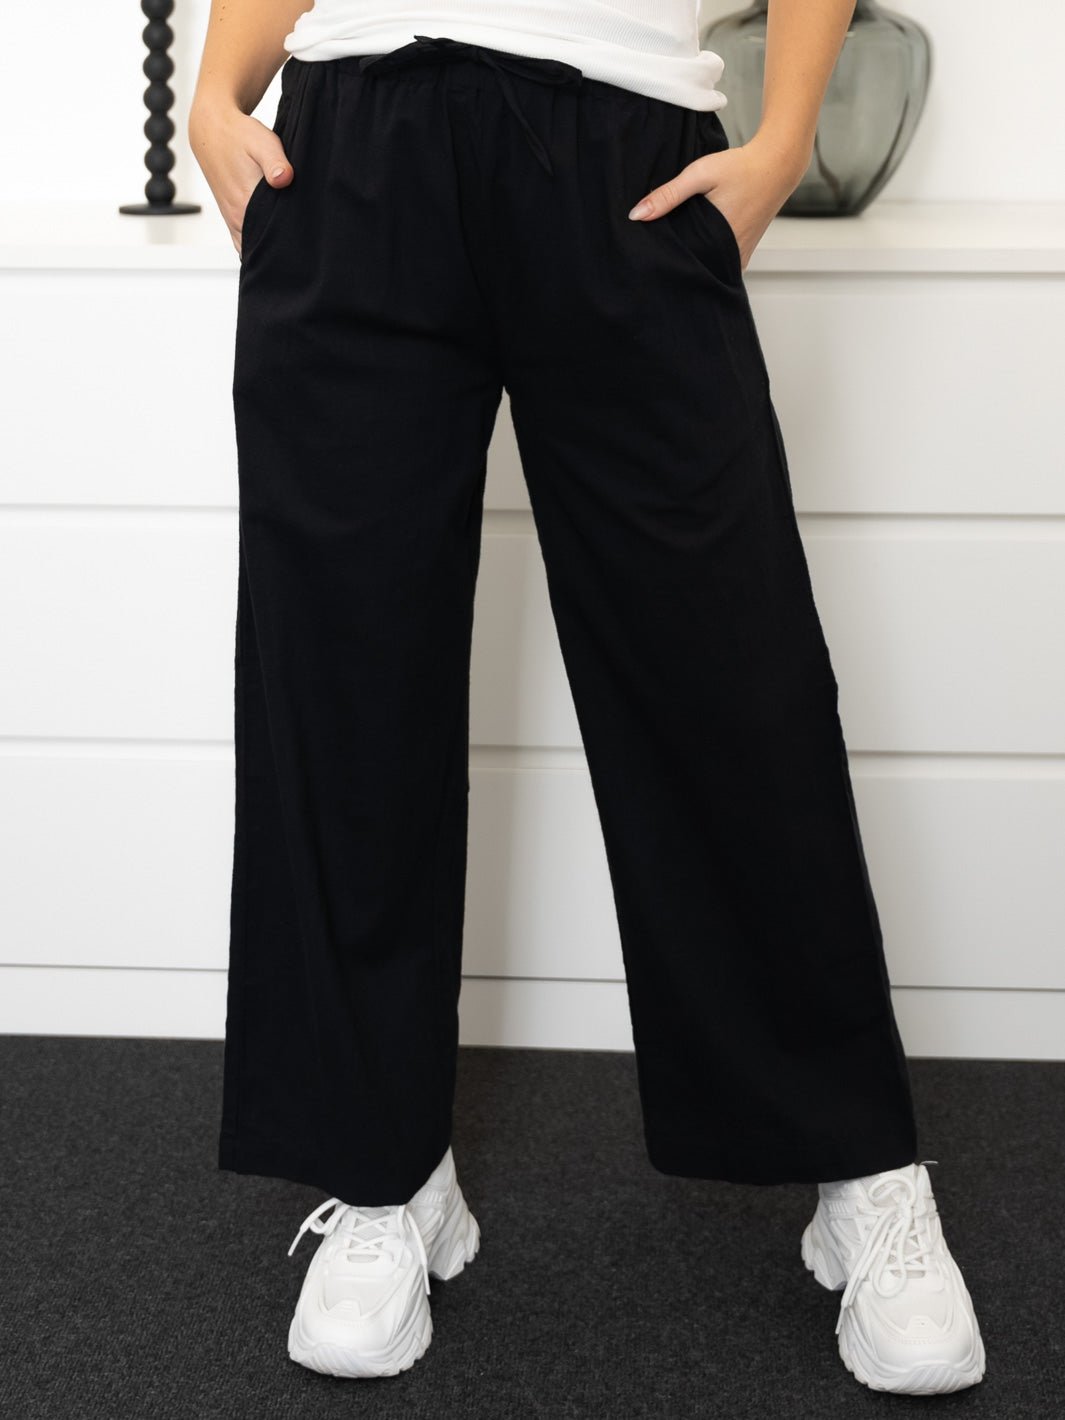 Peyton pants black - Online-Mode